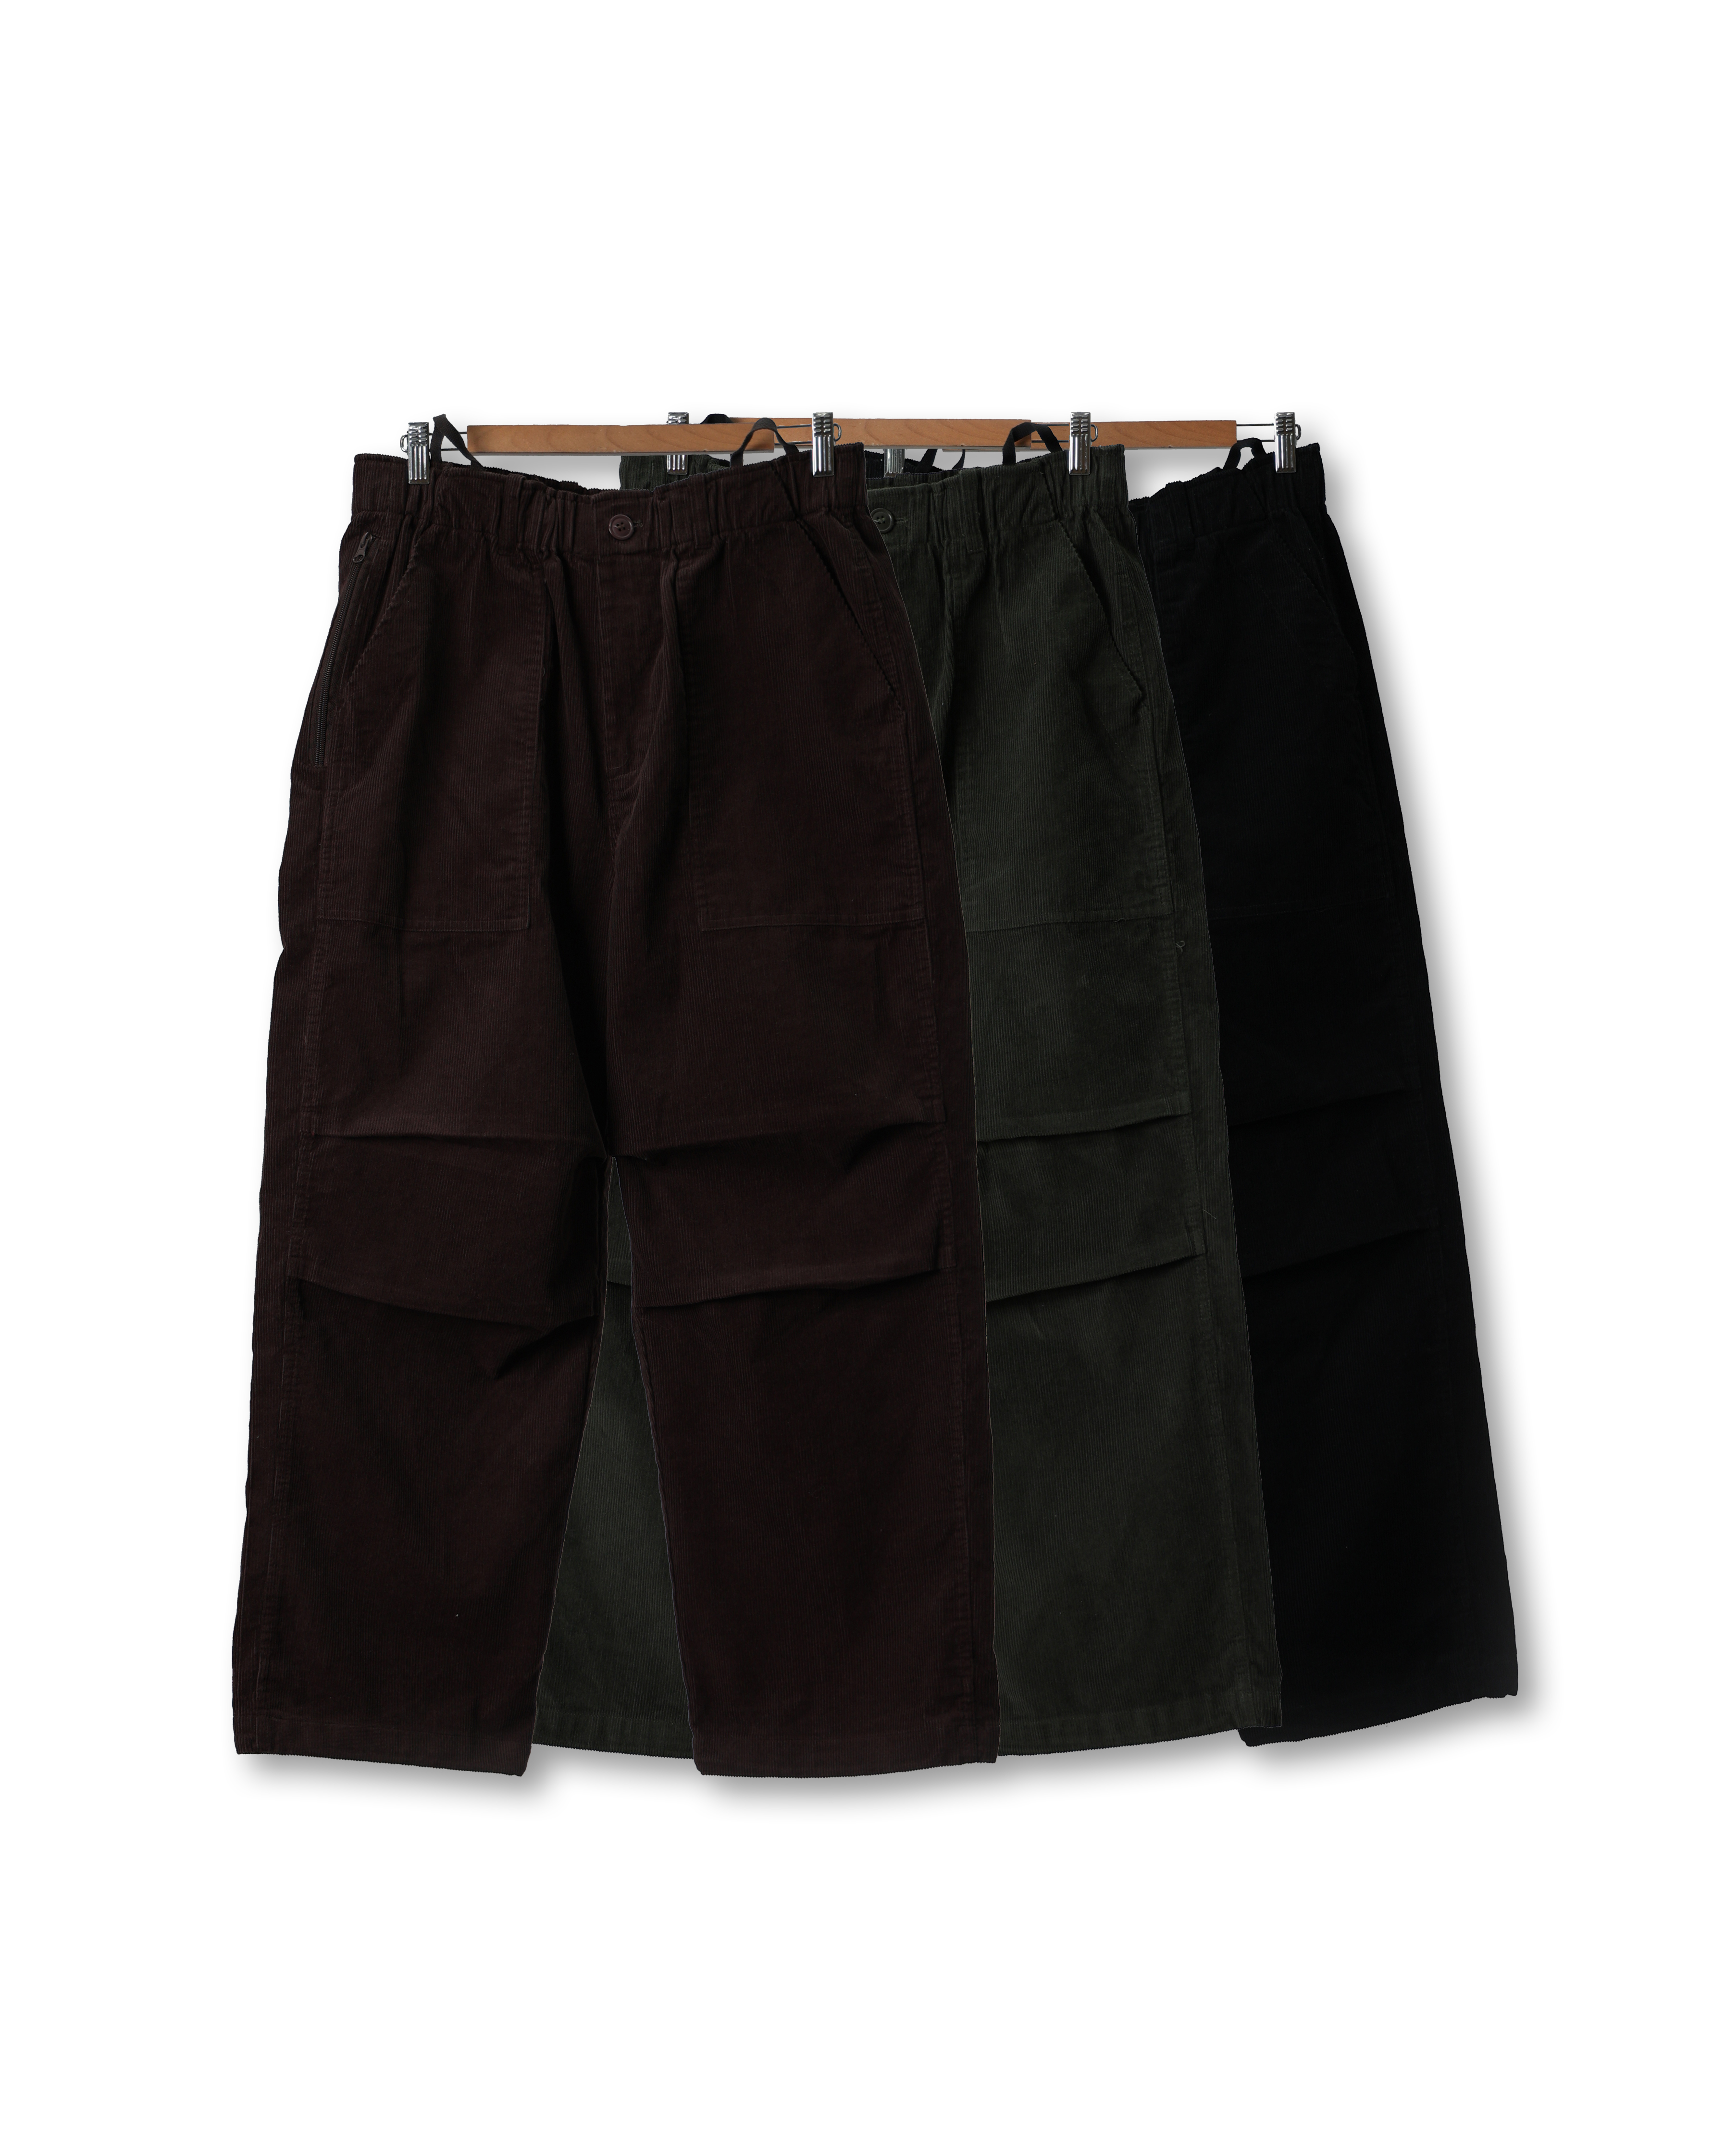 EXPRESS Corduroy Mil Cargo Pleats Pants (Black/Olive/Brown)